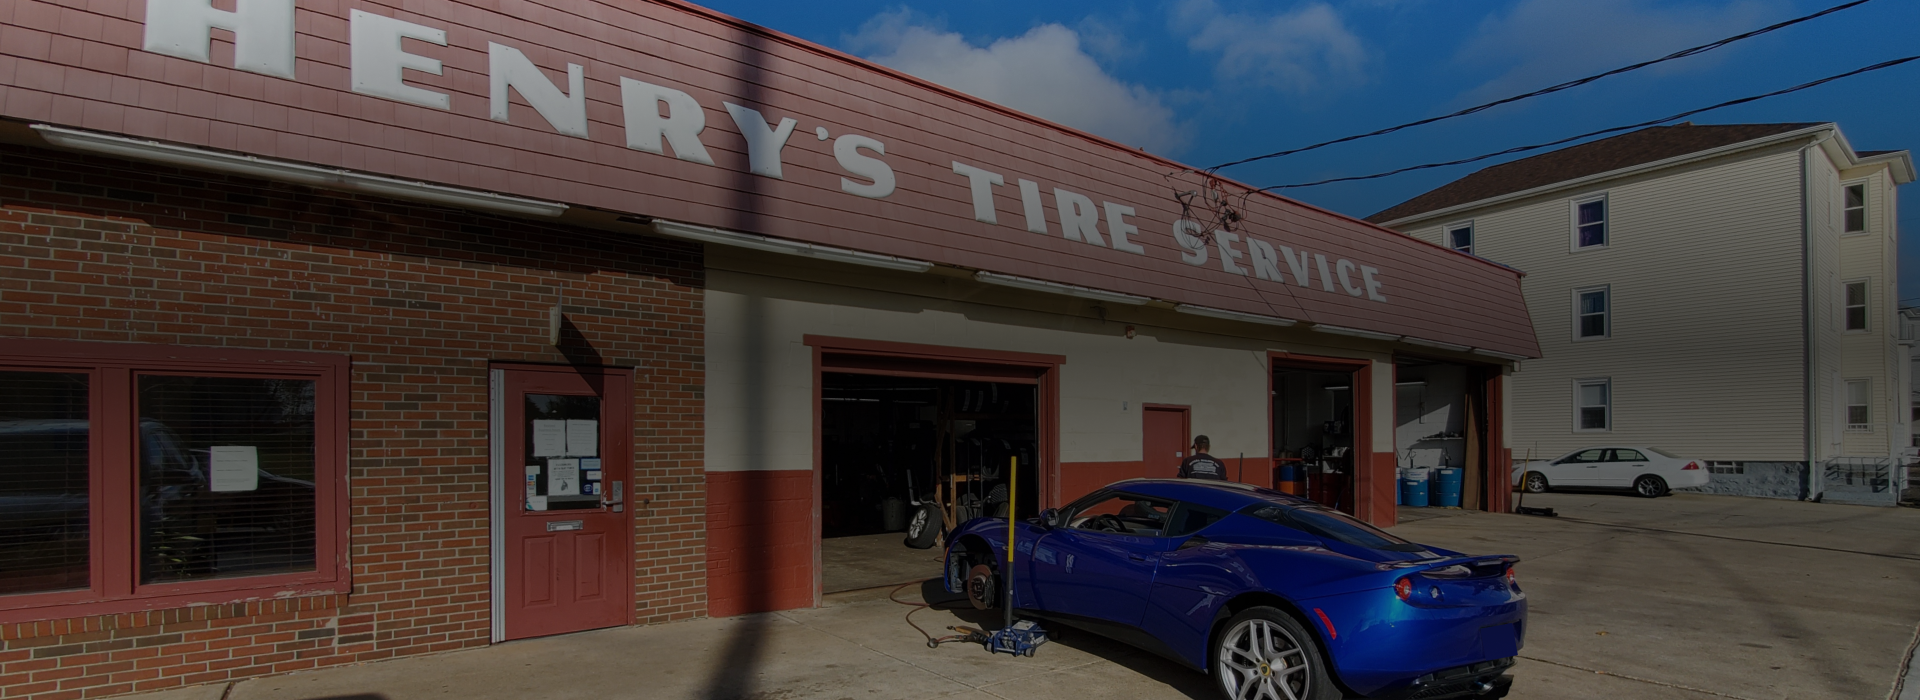  Shop Banner | Henry's Tire Service & Auto Repair